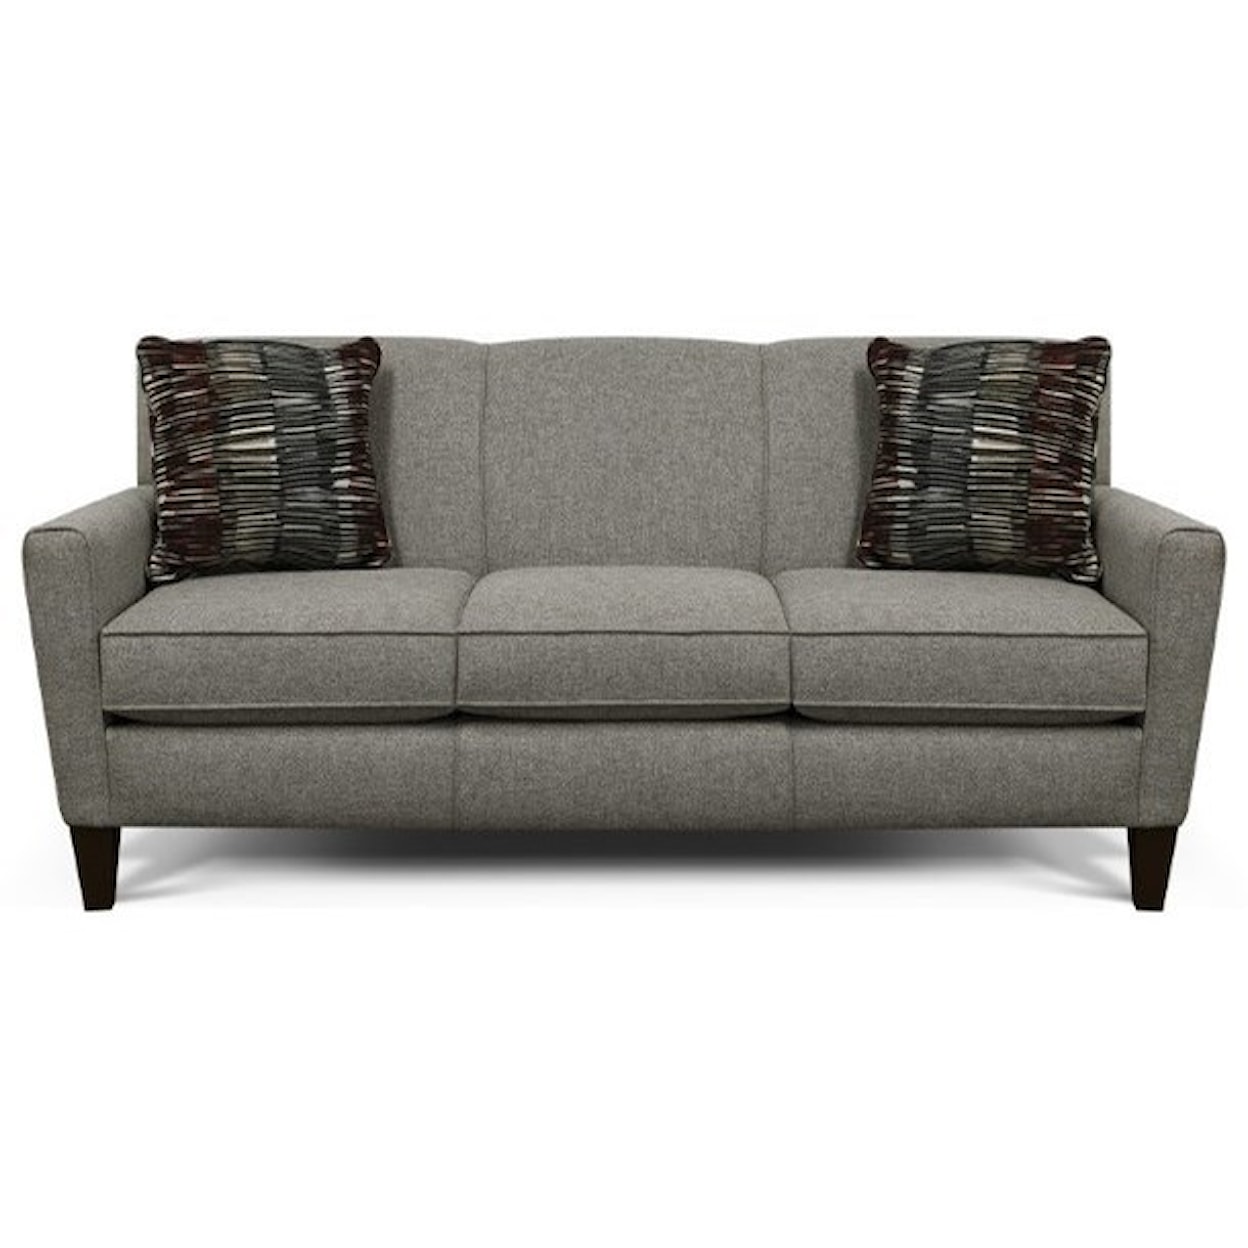 Tennessee Custom Upholstery 6200/LS Series Upholstered Sofa